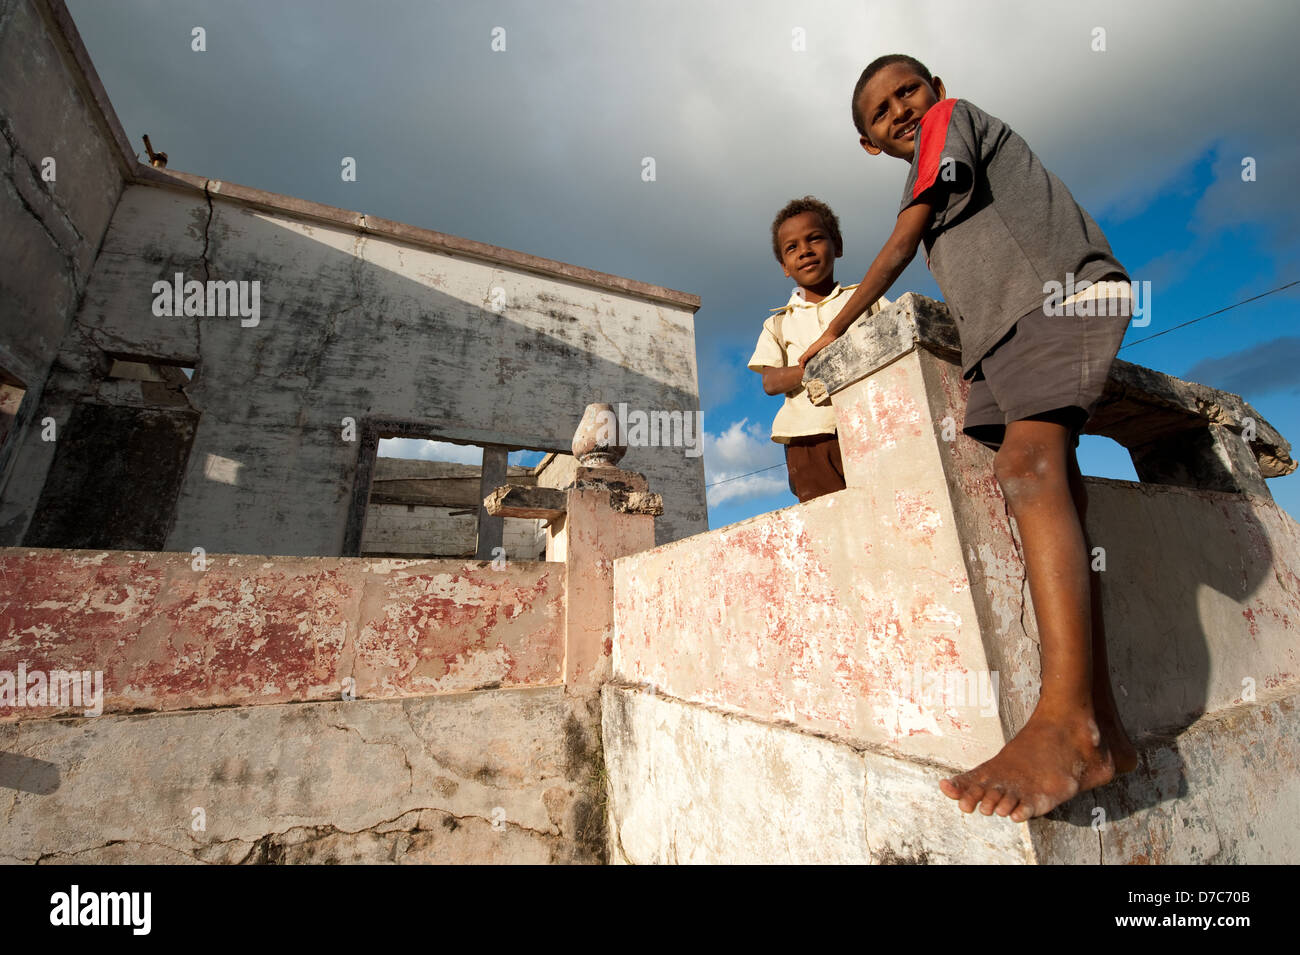 Kinder spielen am alten Kolonialgebäude, Ilha do Mocambique, Mosambik Stockfoto